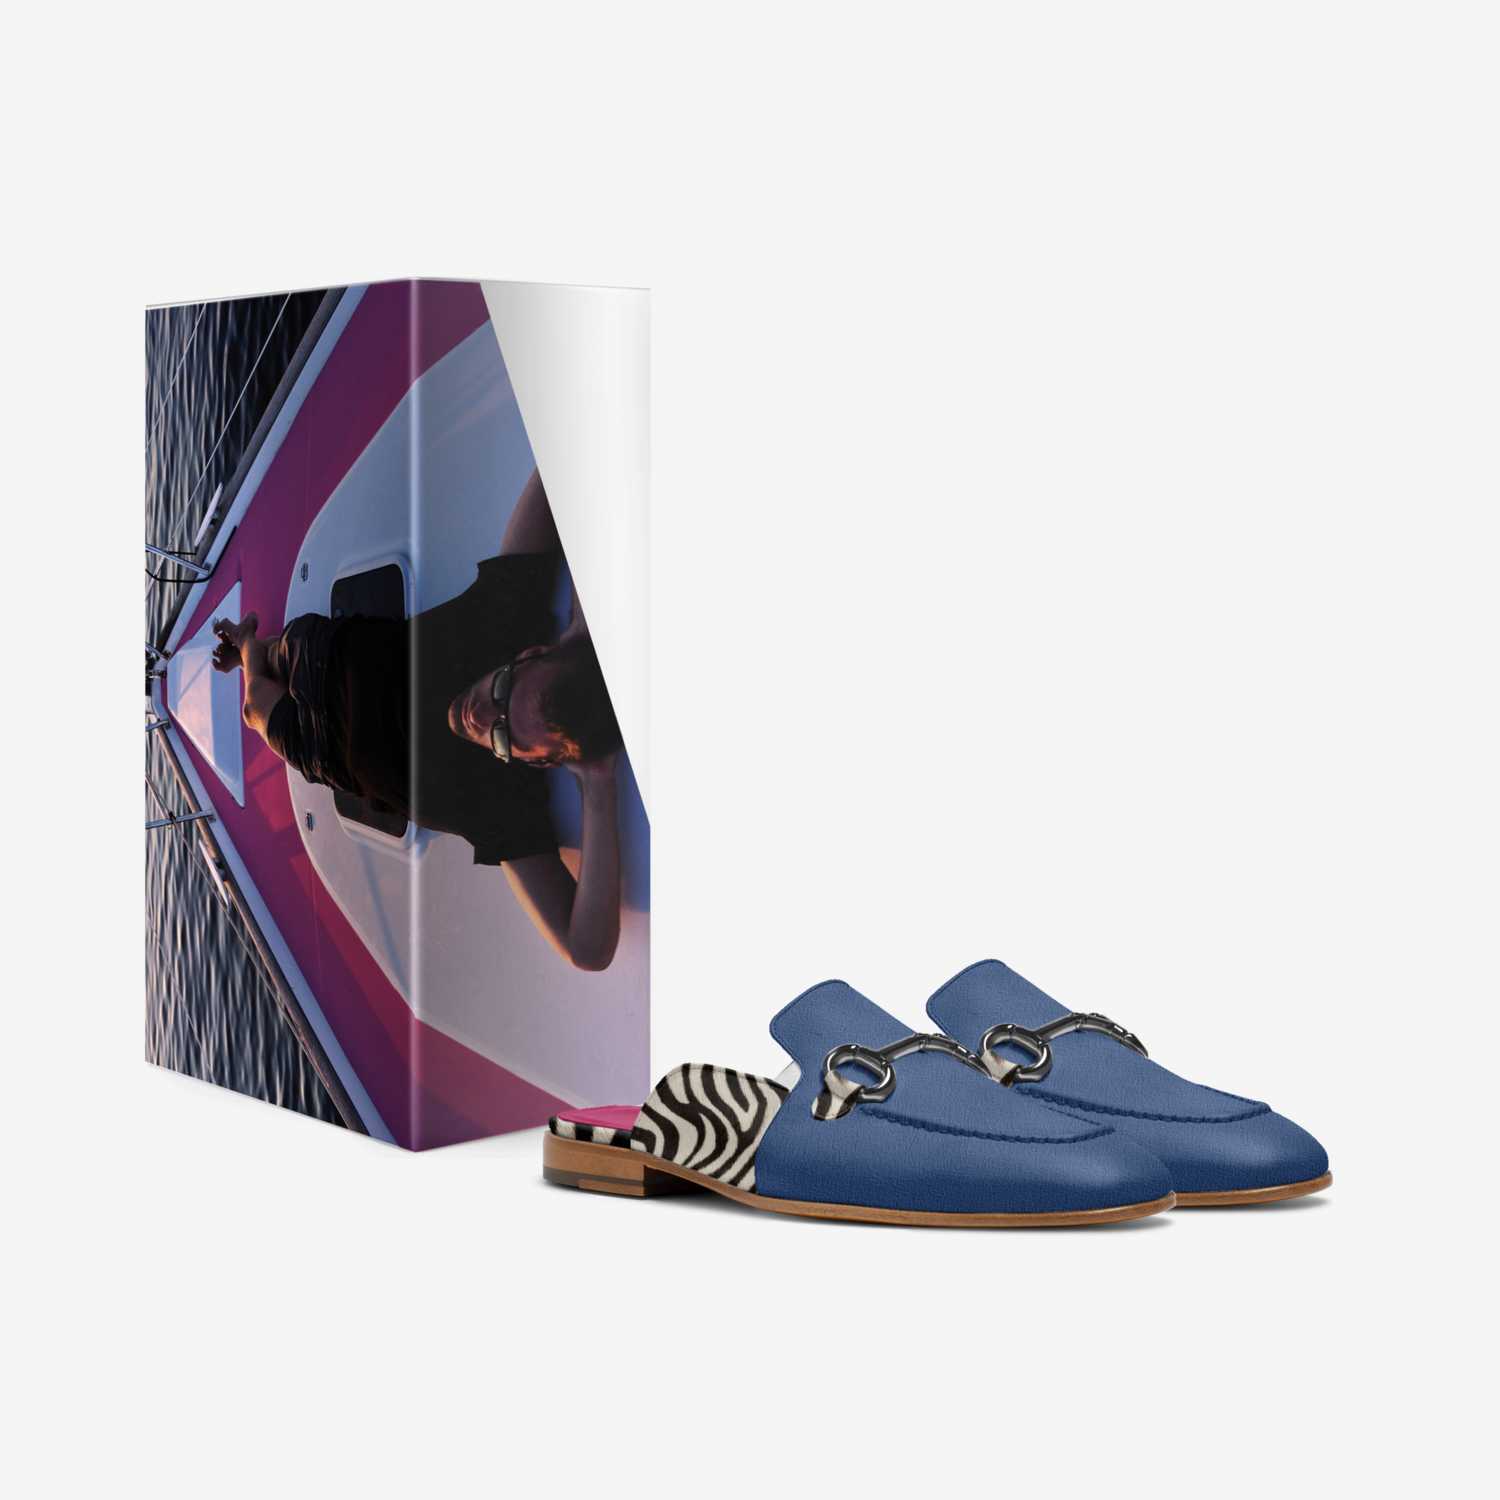 Savana custom made in Italy shoes by Ioana King | Box view